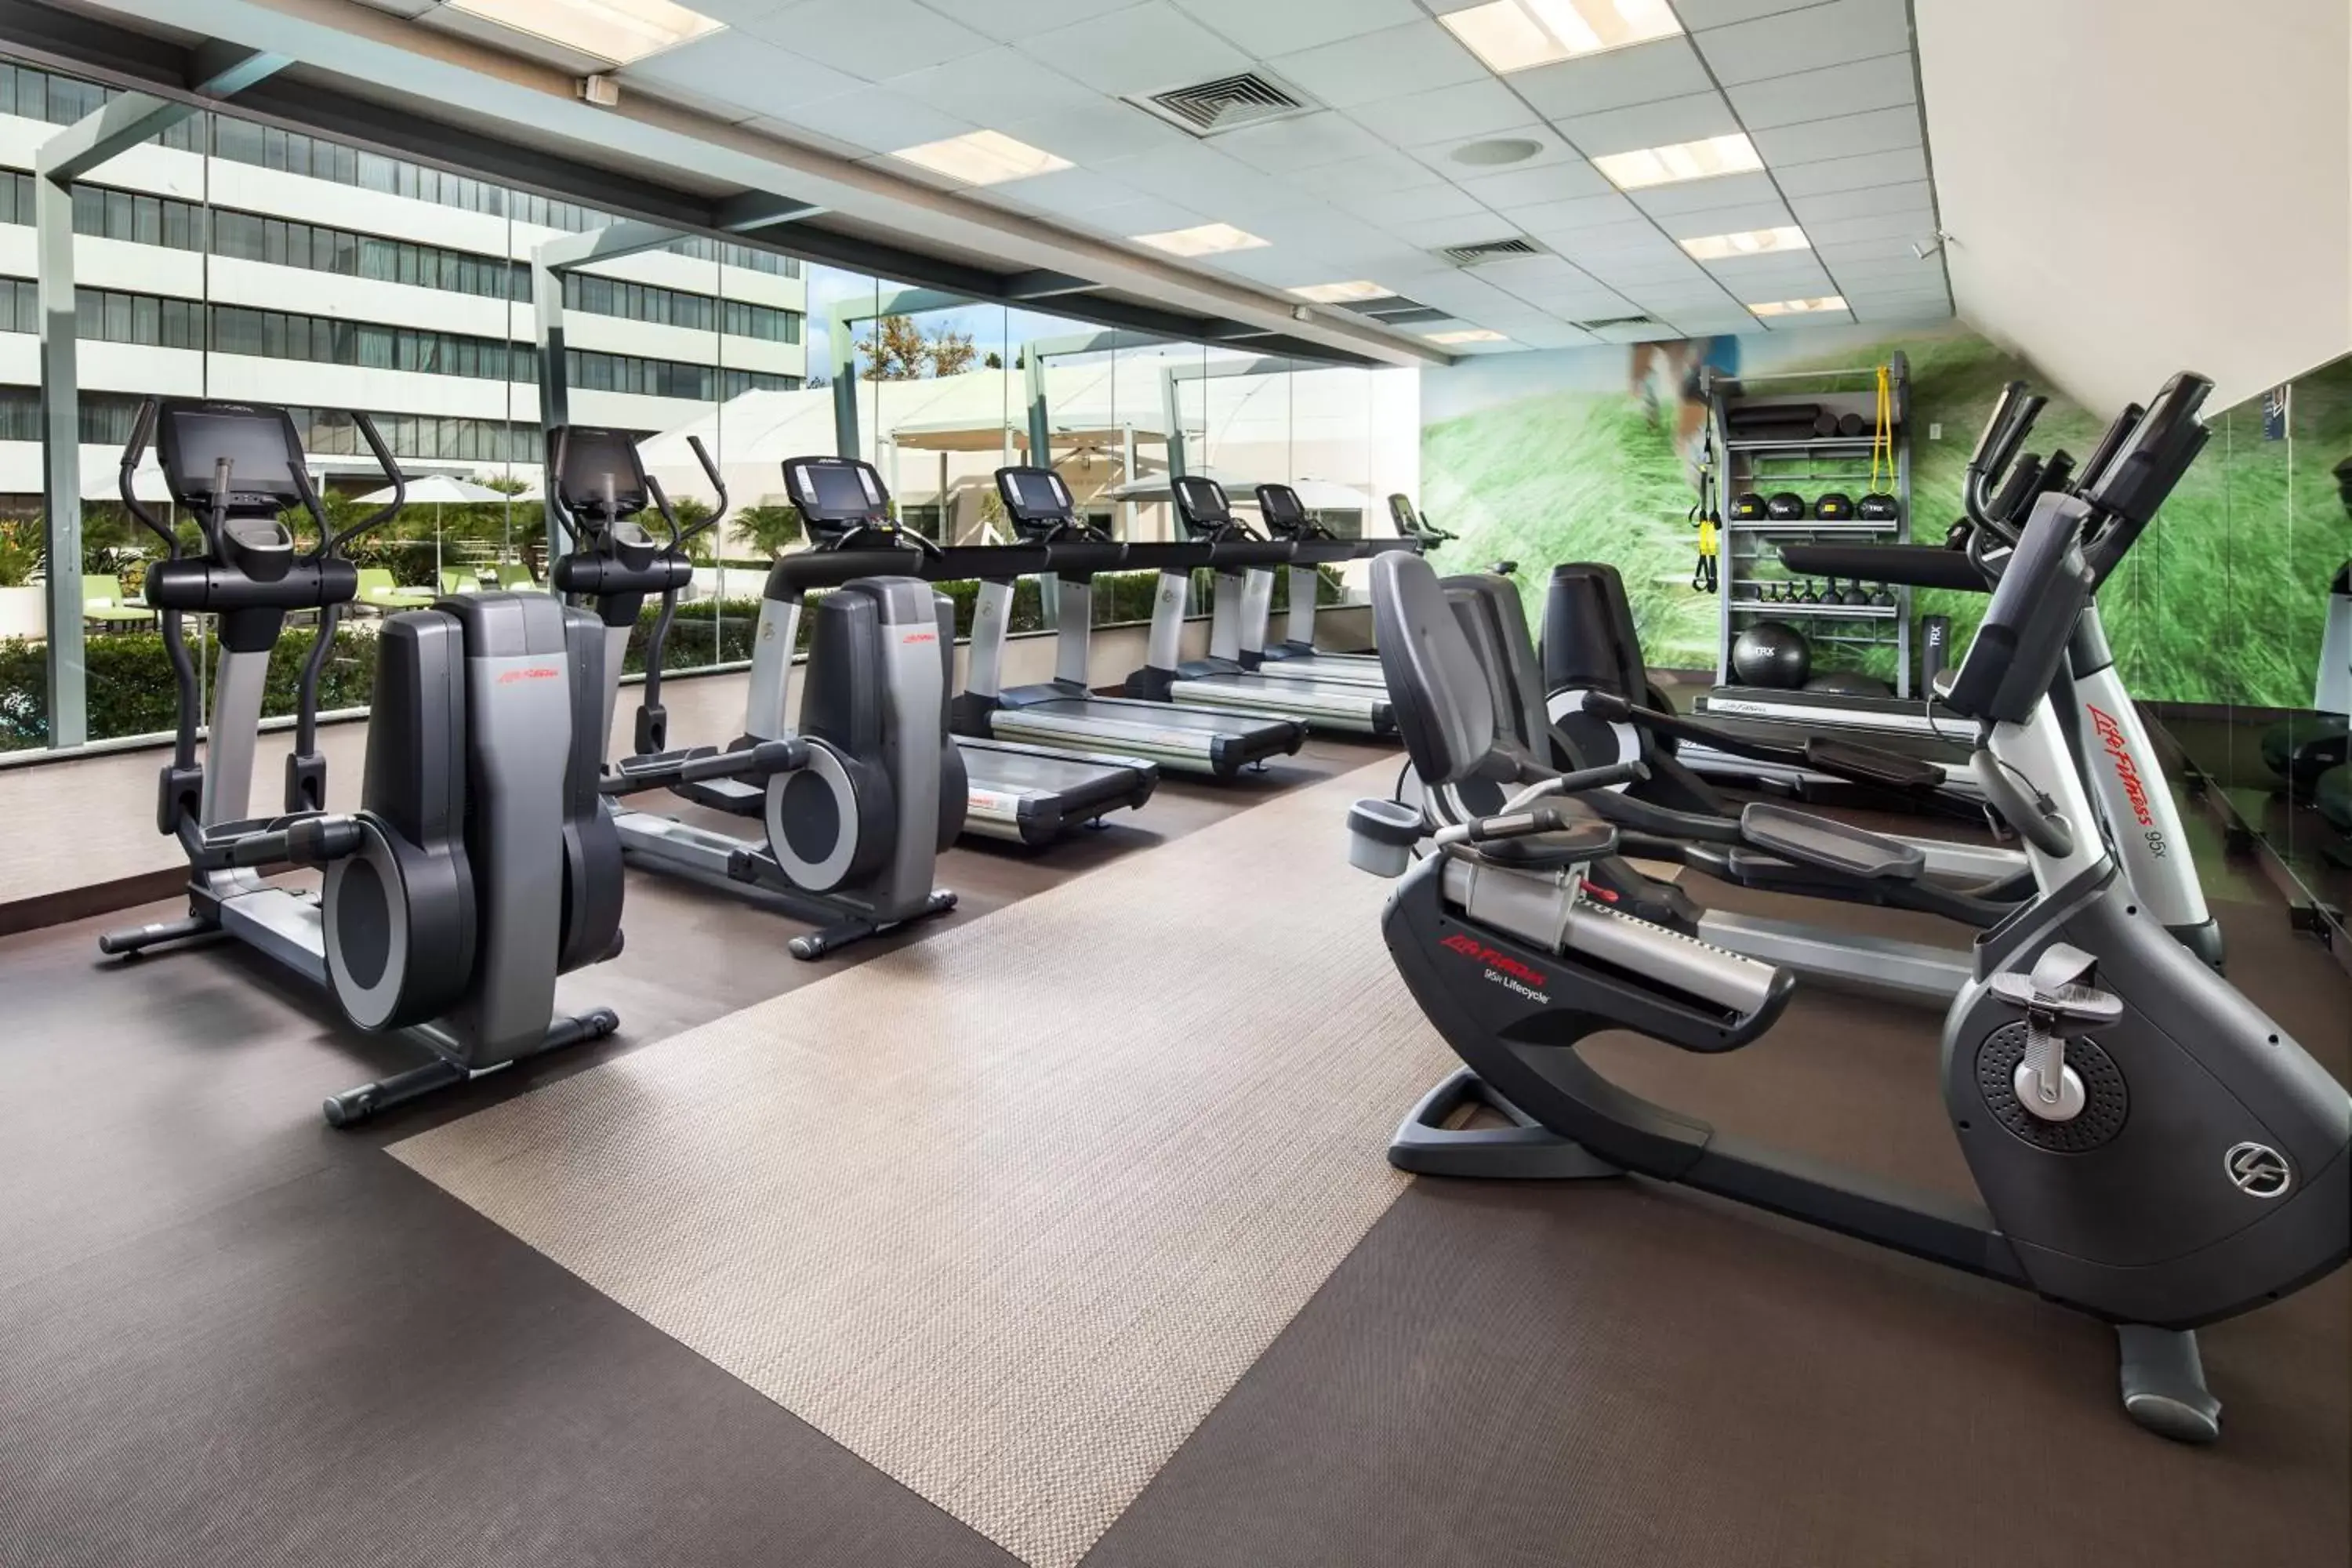 Fitness centre/facilities, Fitness Center/Facilities in The Westin South Coast Plaza, Costa Mesa